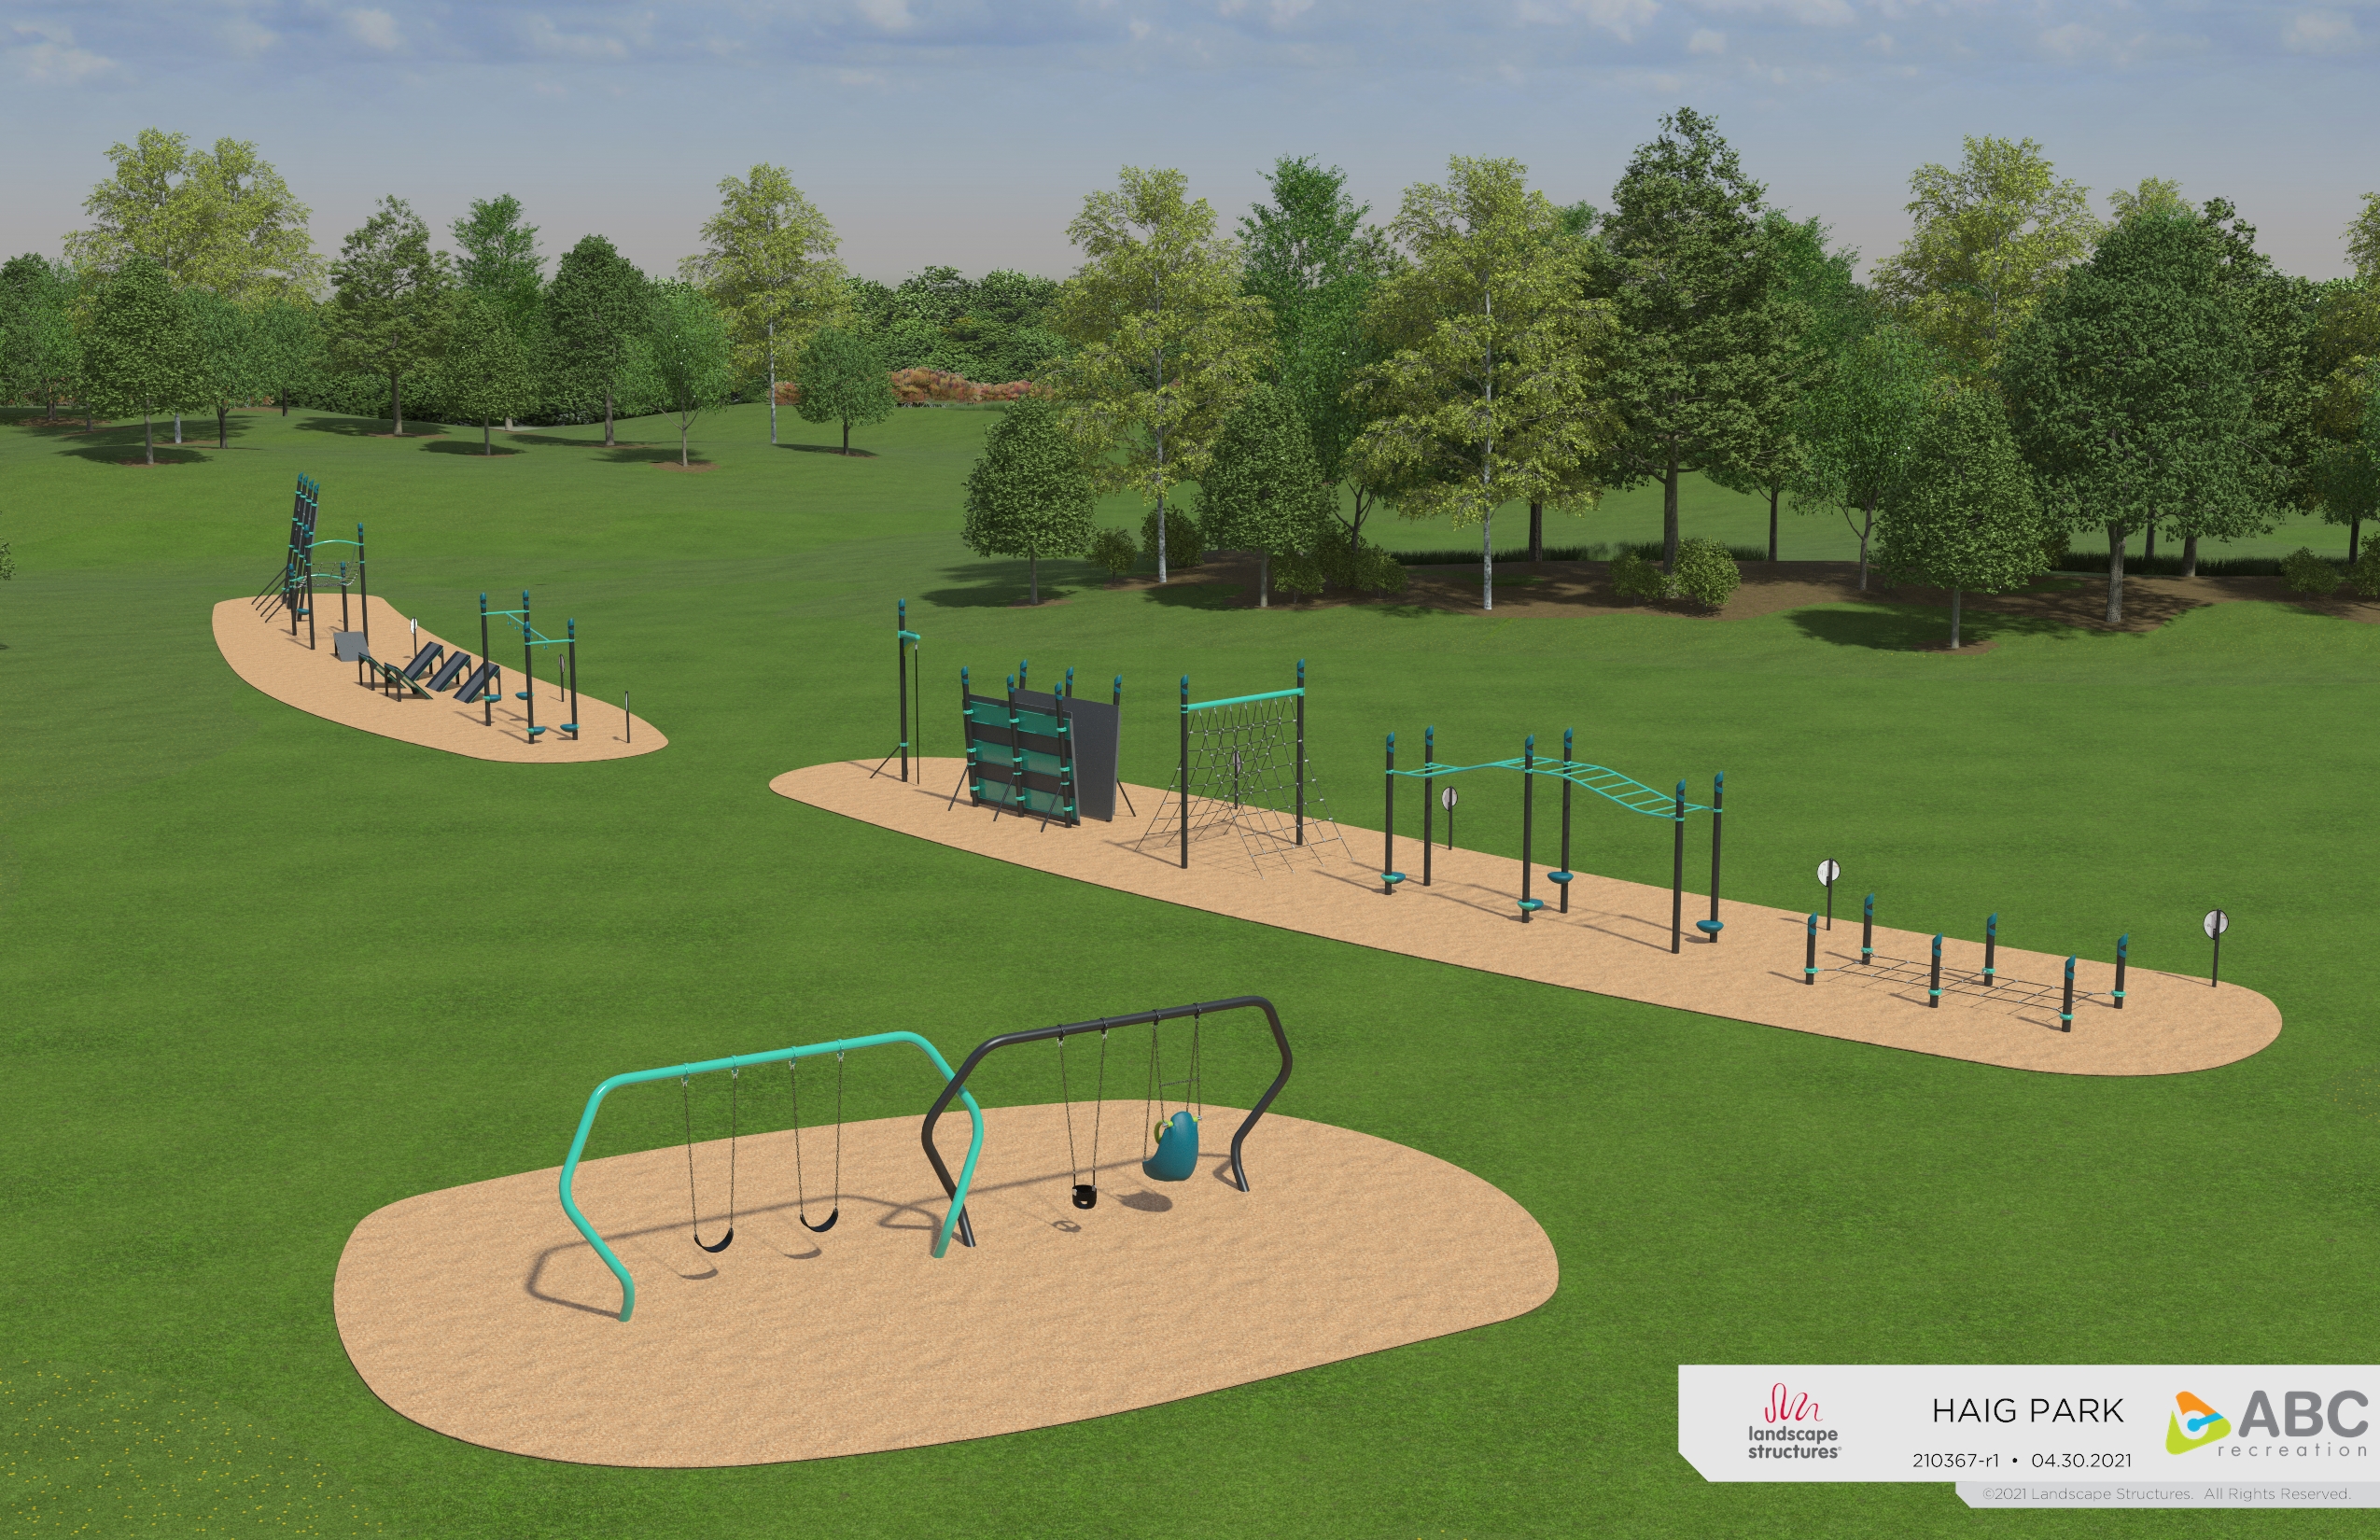 Haig Park Design Concept, shows playground equipment.